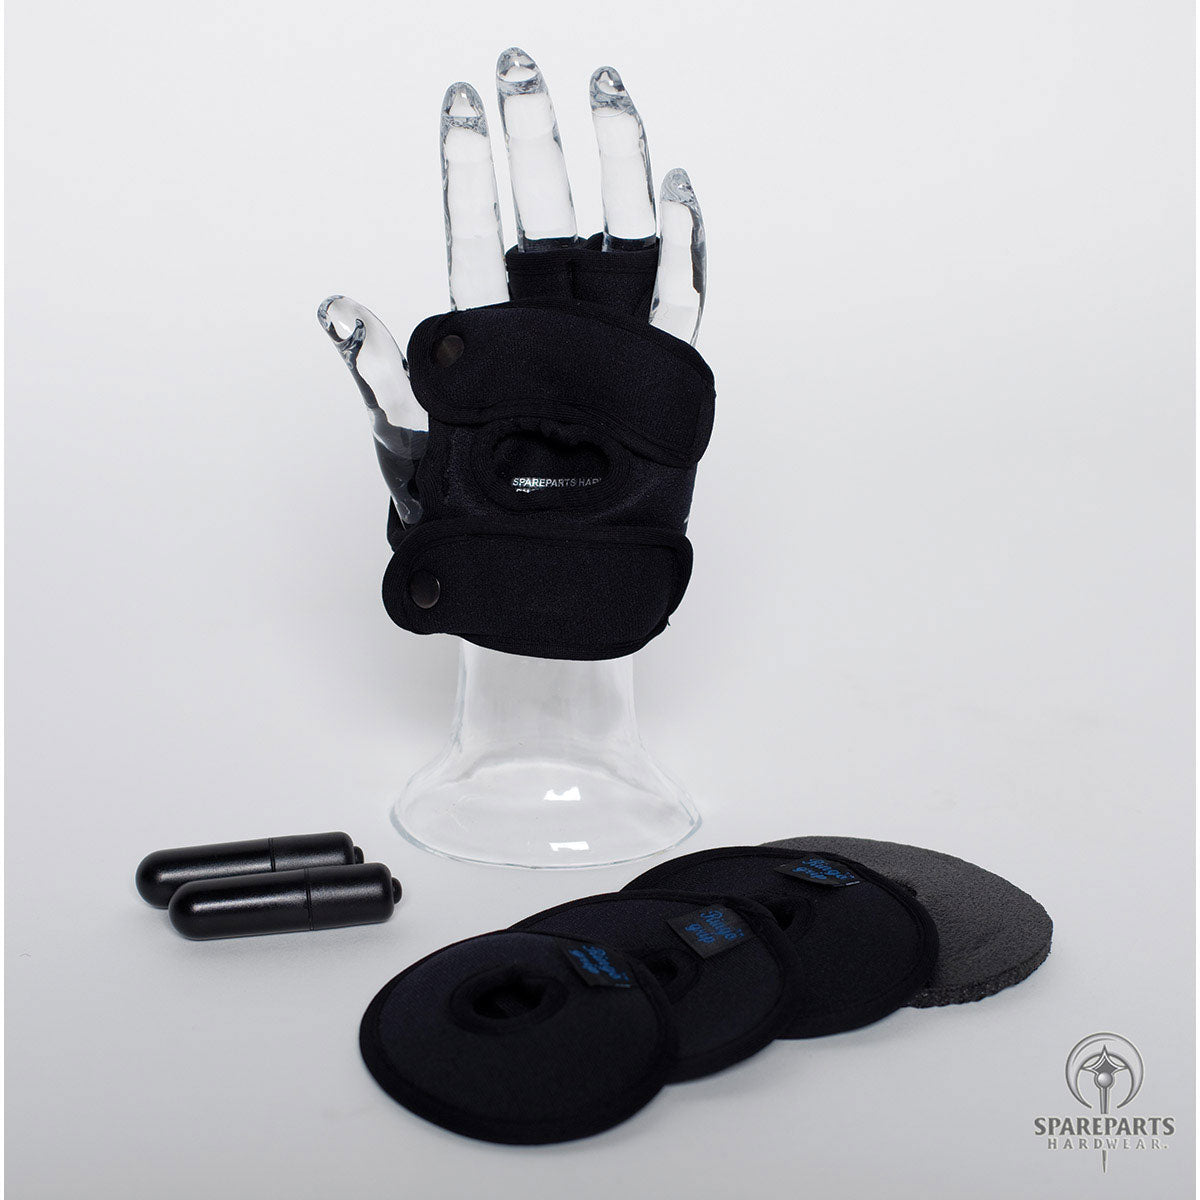 SpareParts Hardwear La Palma Dildo Glove XS/SM Left Hand